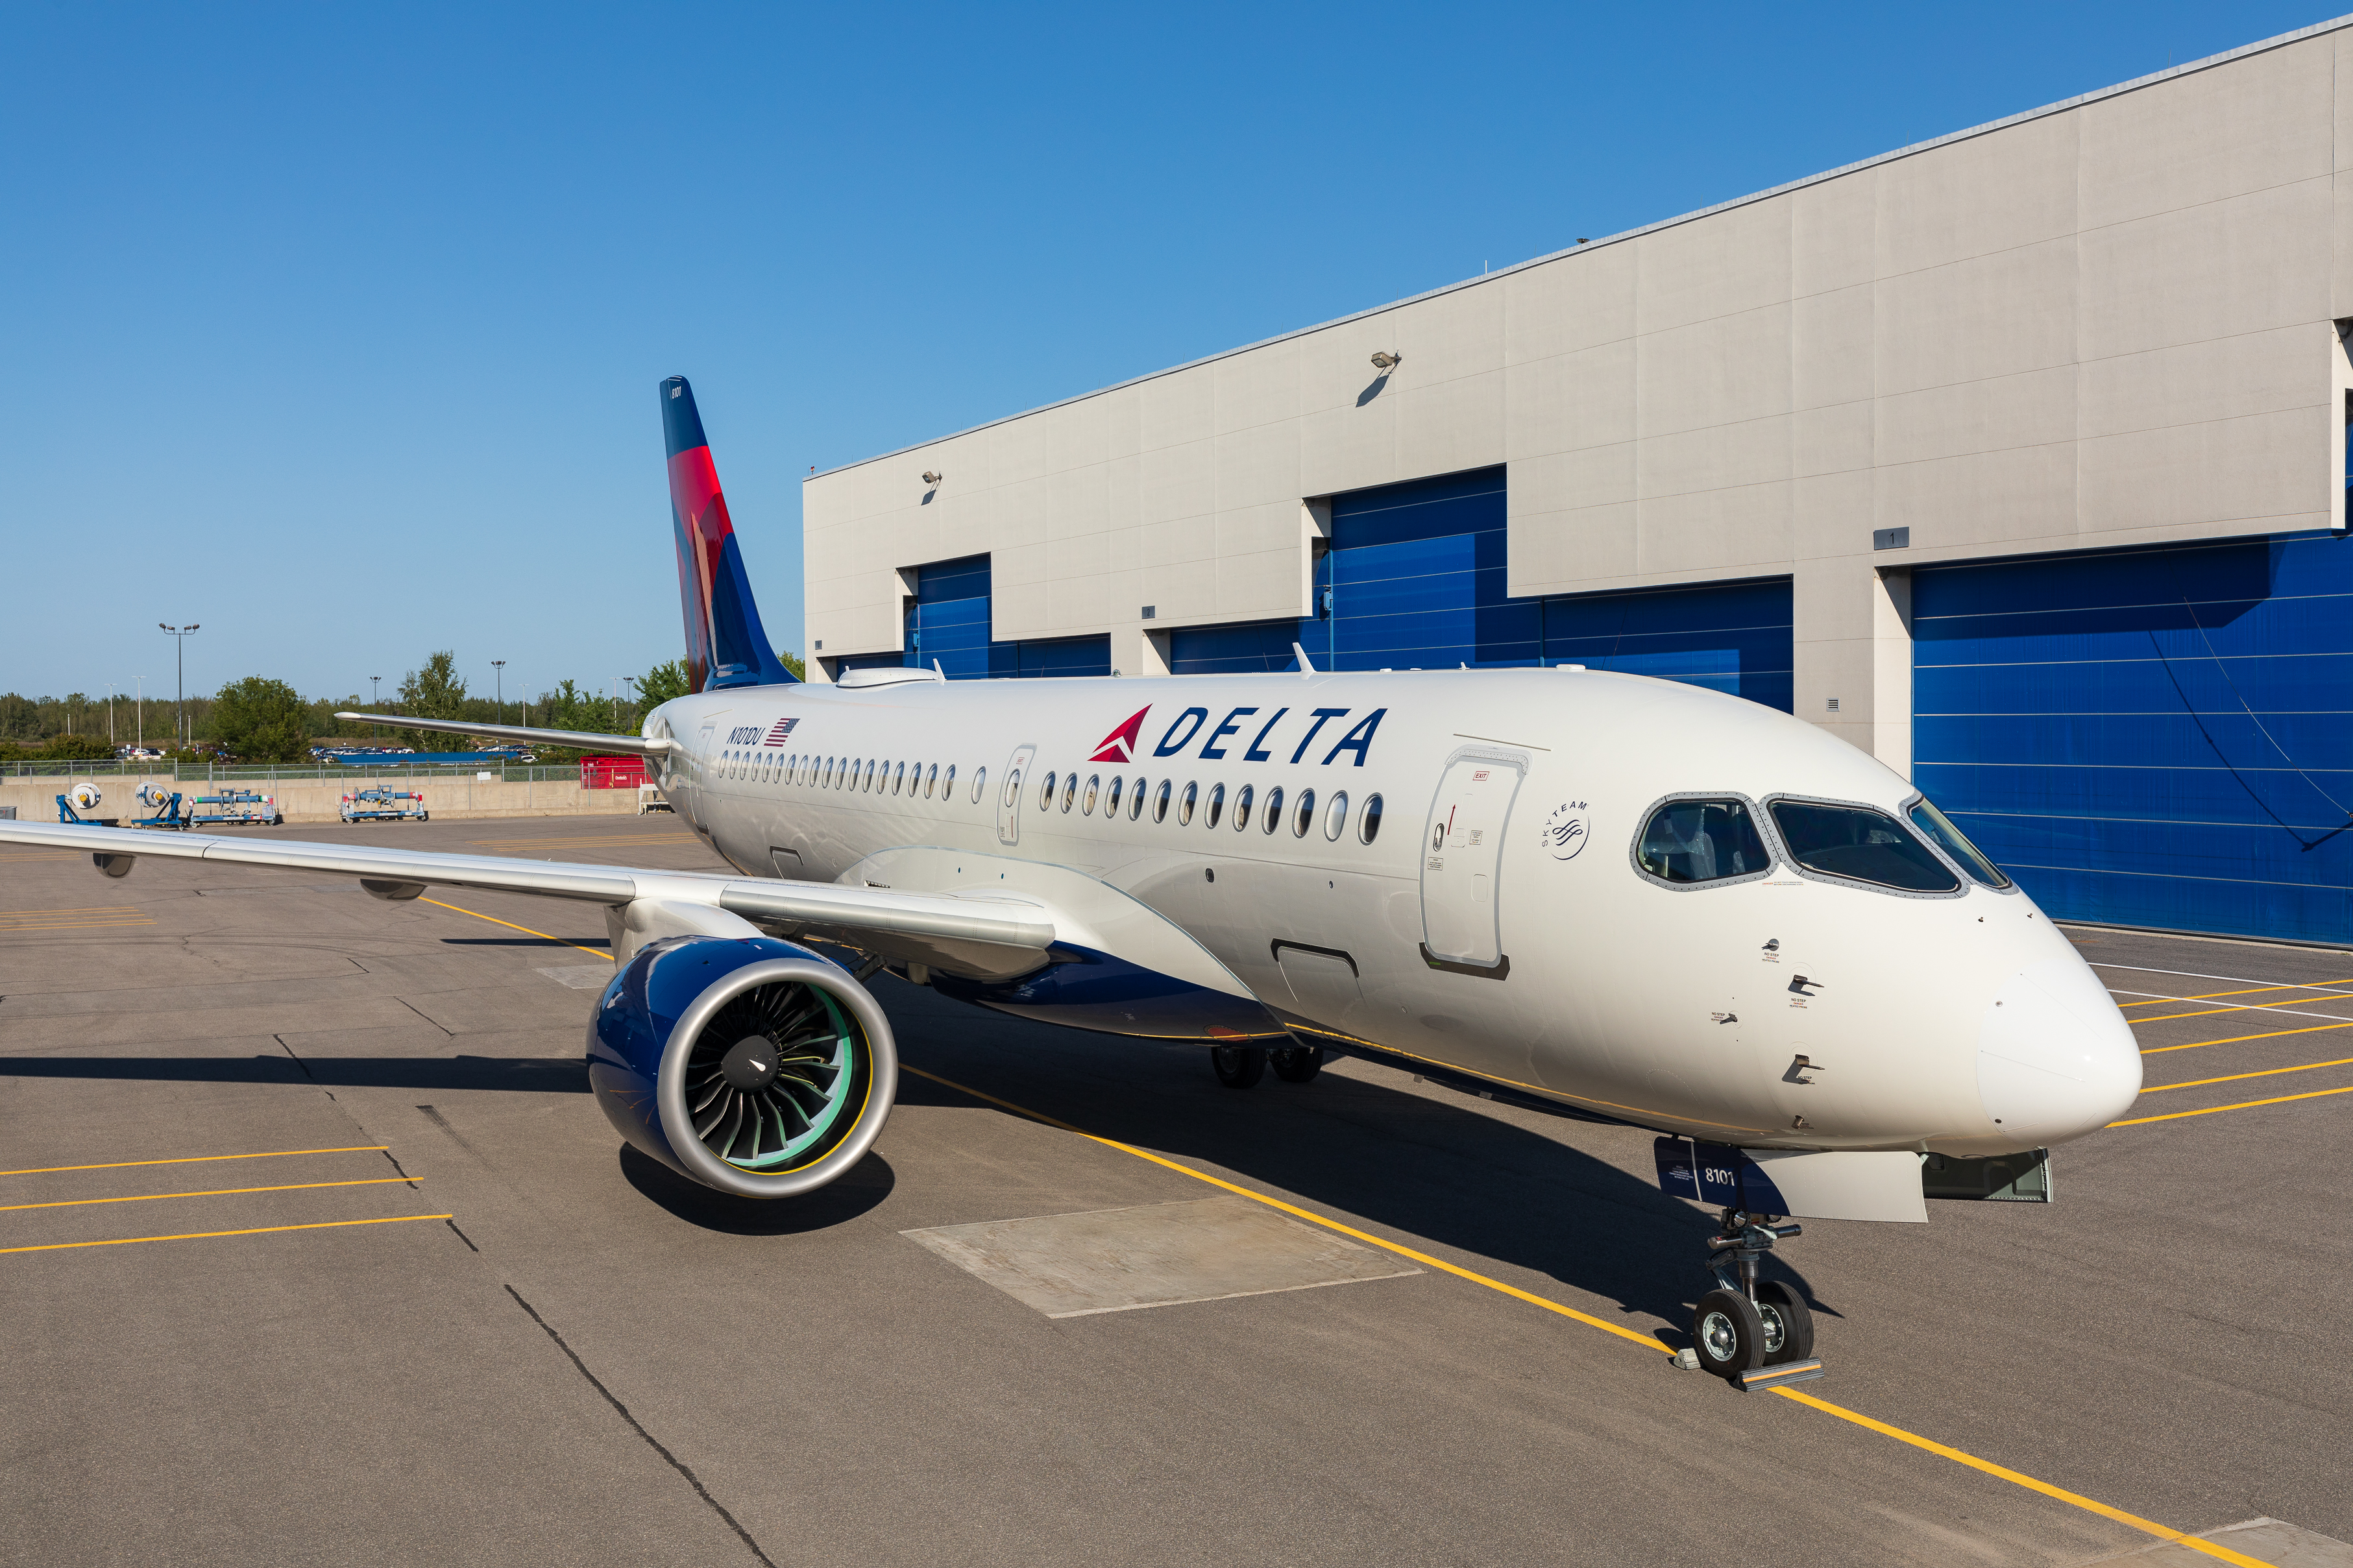 Delta A220 start service